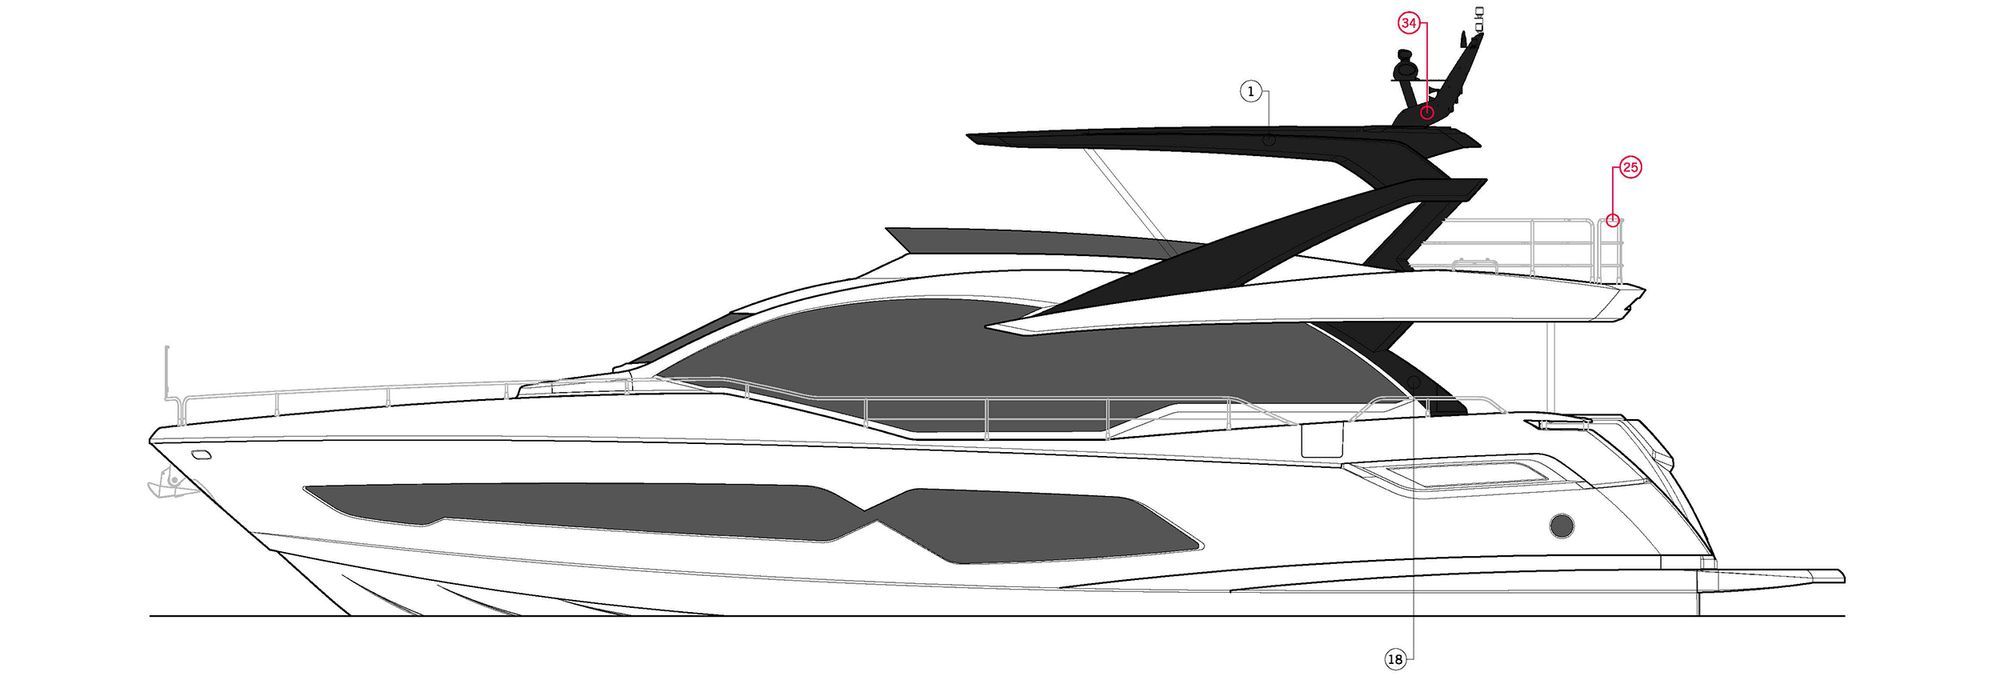 sunseeker 76 yacht layout